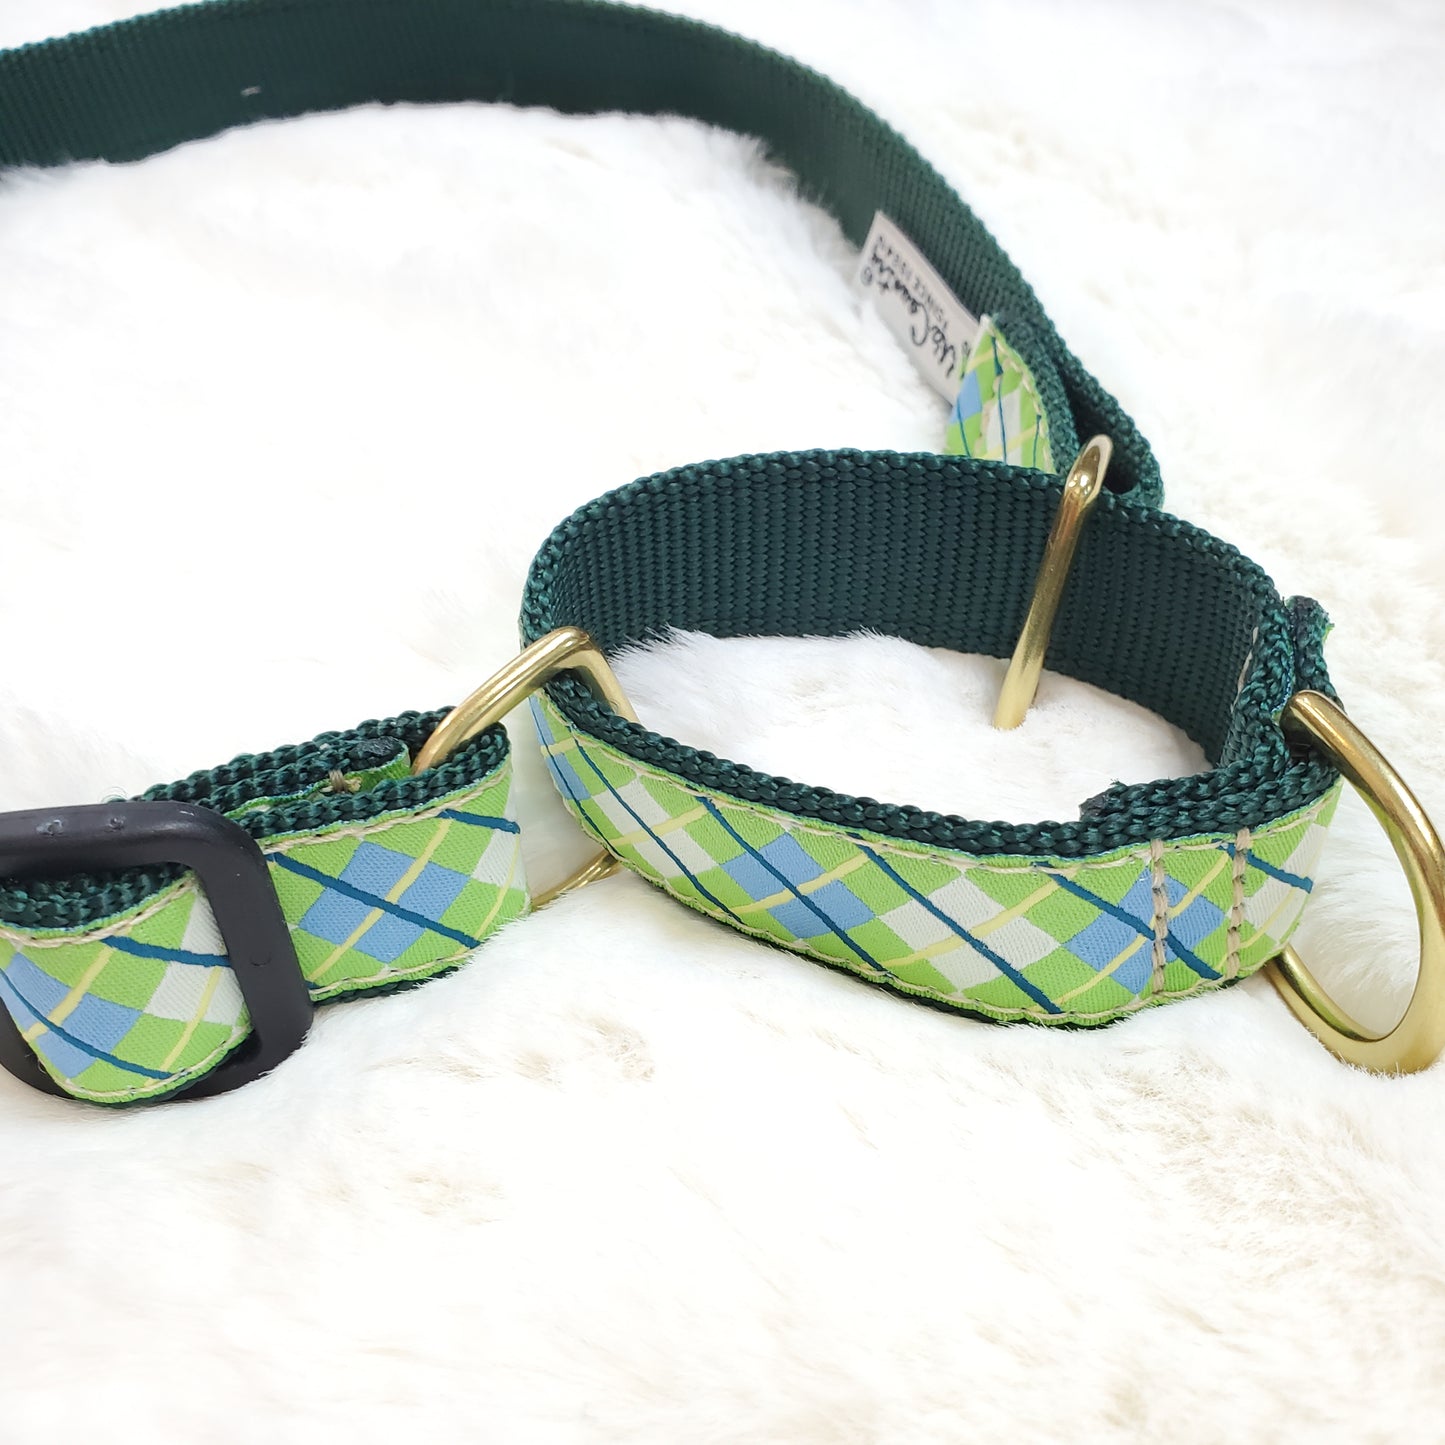 Blue & Green Argyle Dog Collar Martingale